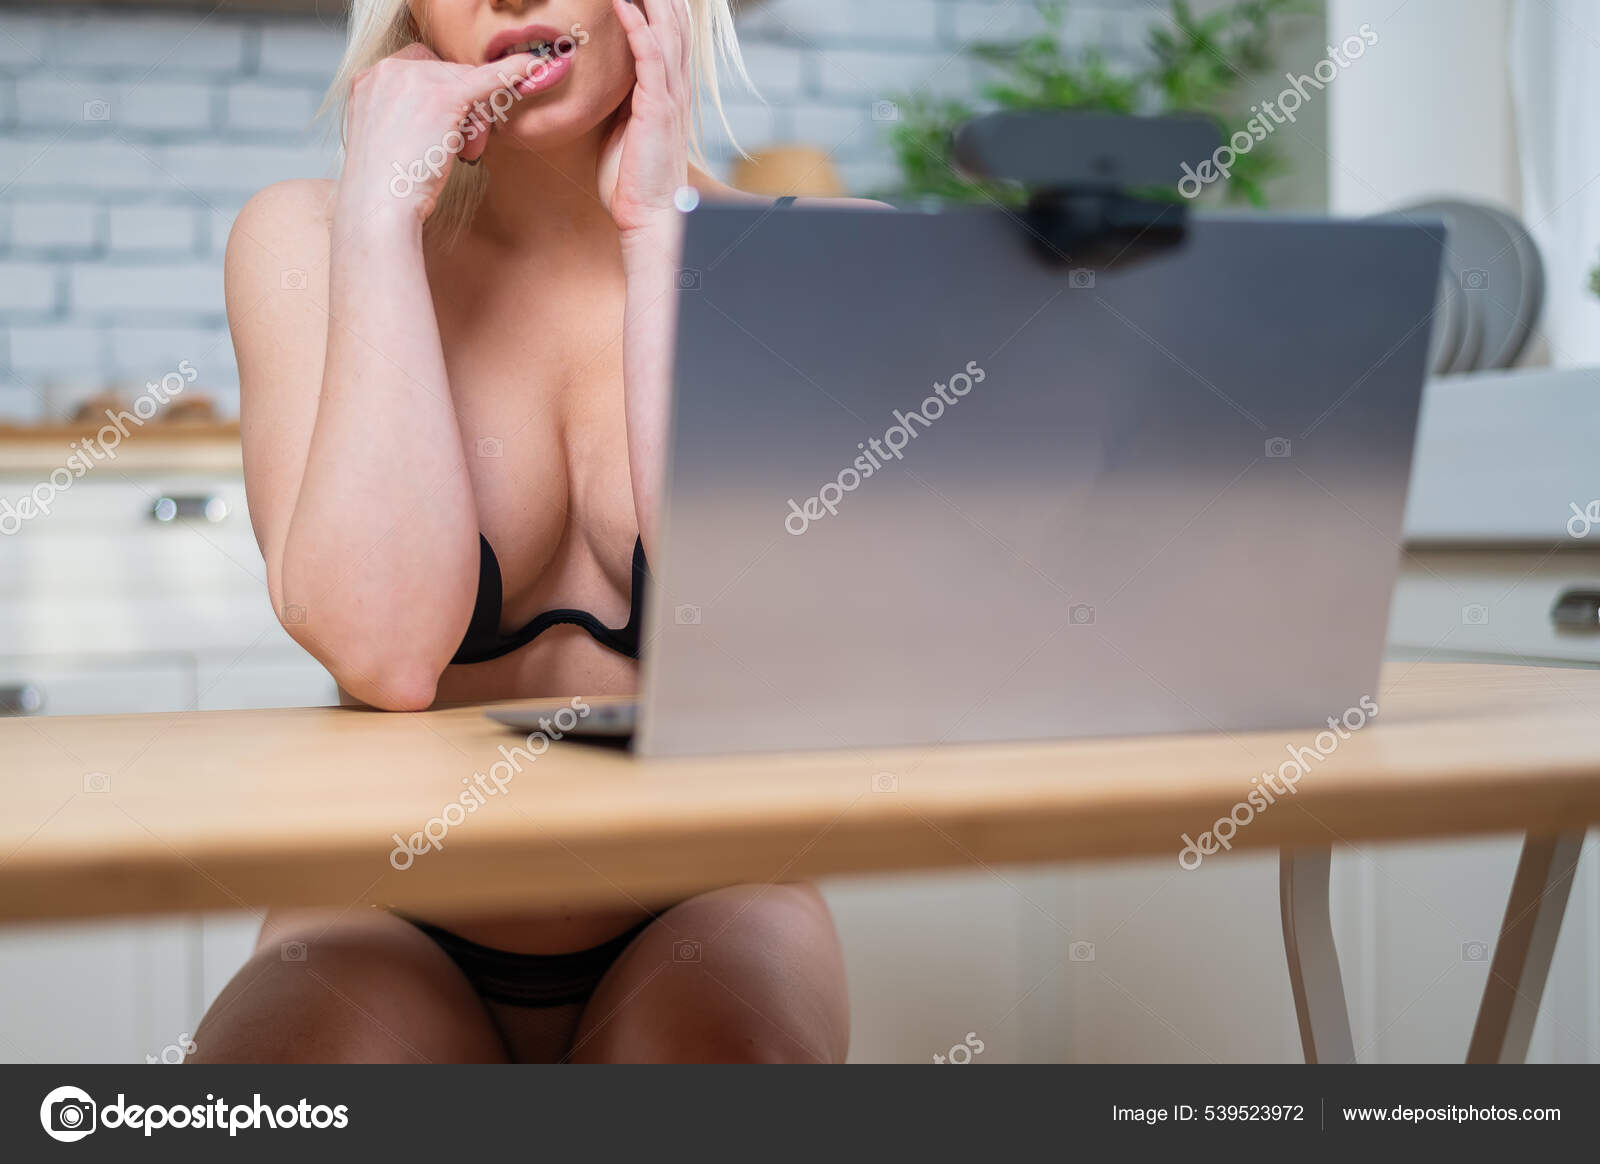 A girl in lingerie flirts on a webcam on a laptop